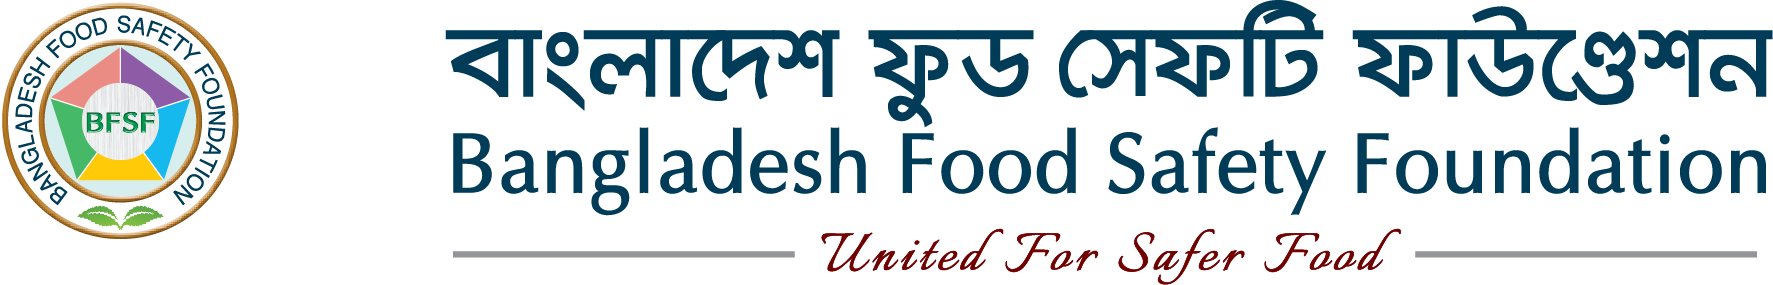 Bangladesh Food Safety Foundation